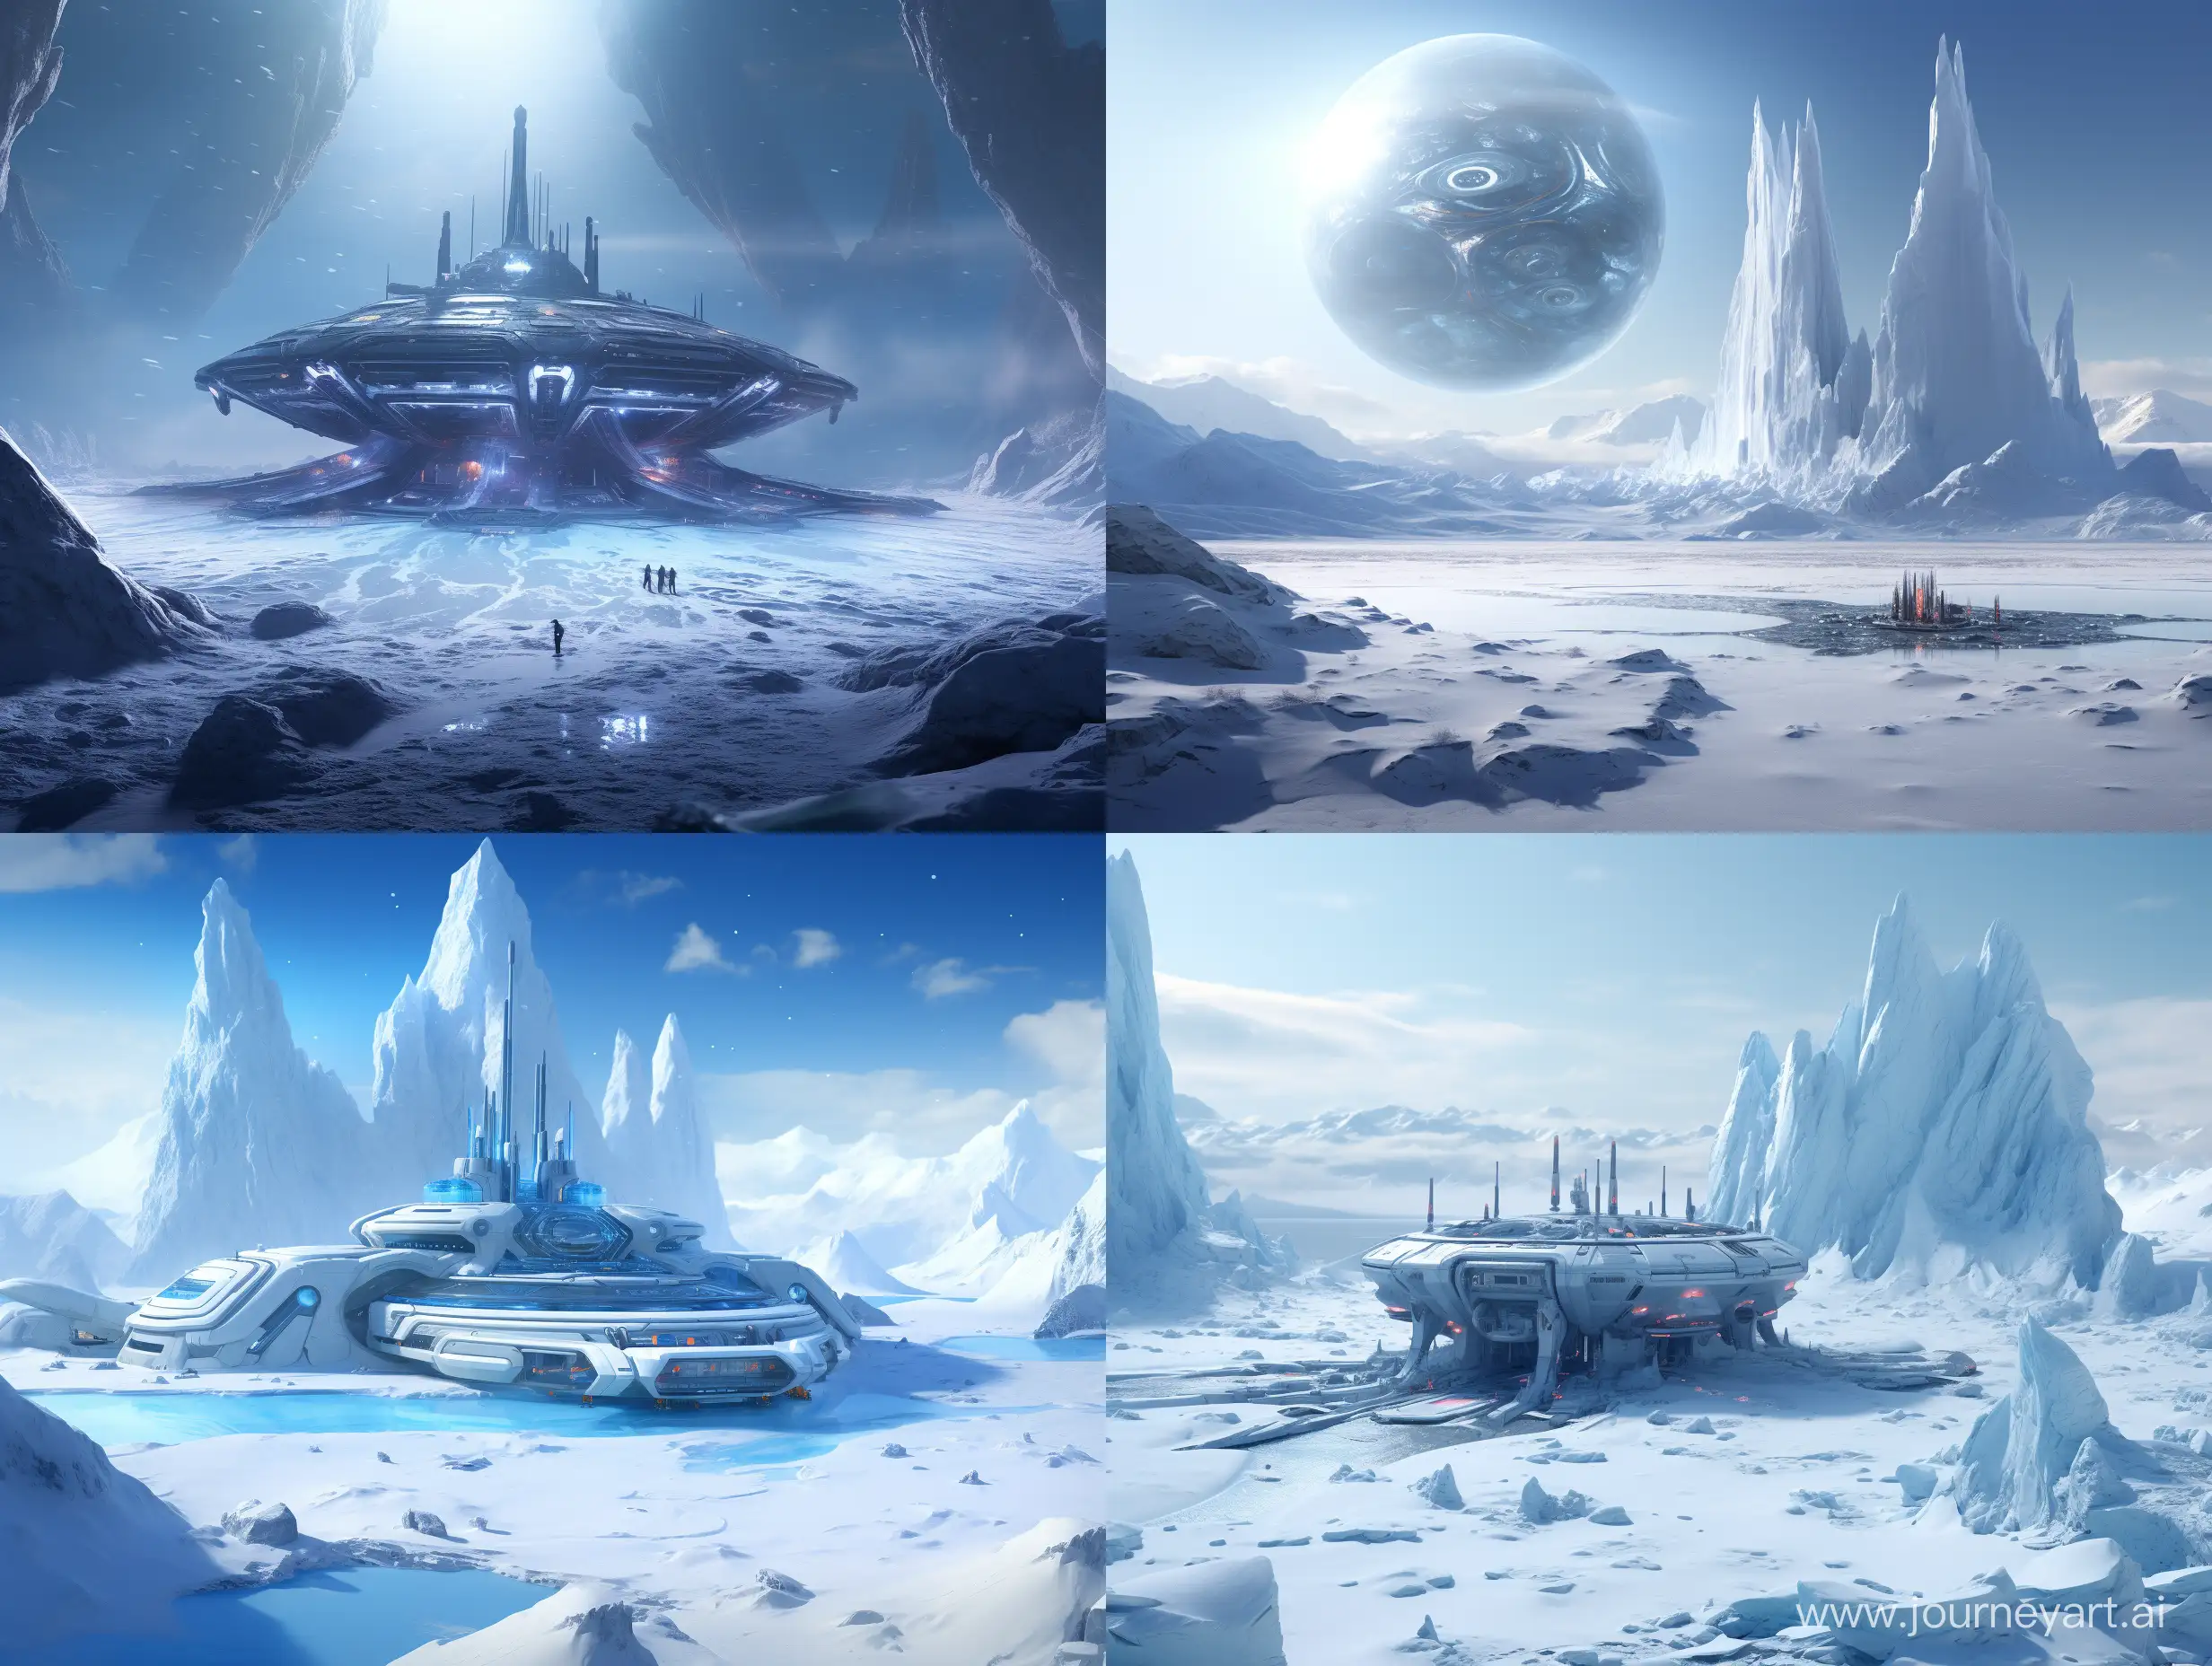 Otherworldly-Exploration-Alien-Spaceship-on-Ice-Planet